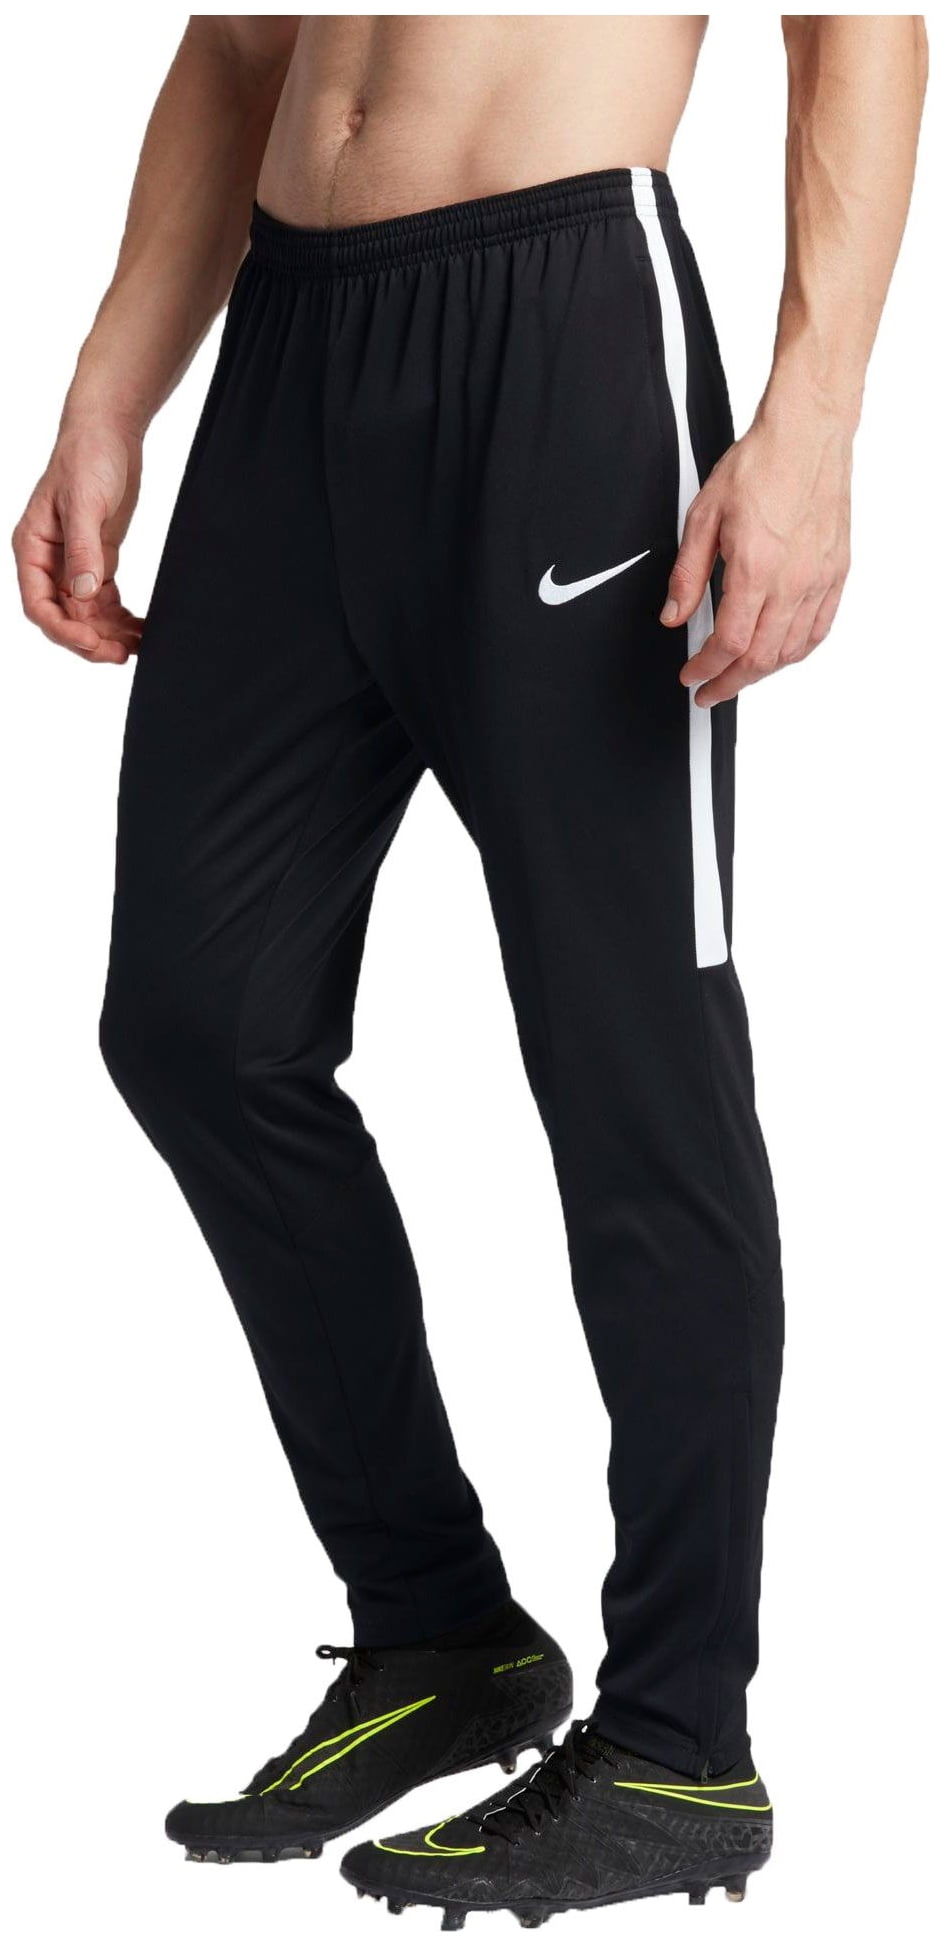 nike : men's dry soccer training pants black, white (large, black, black, white, white) -